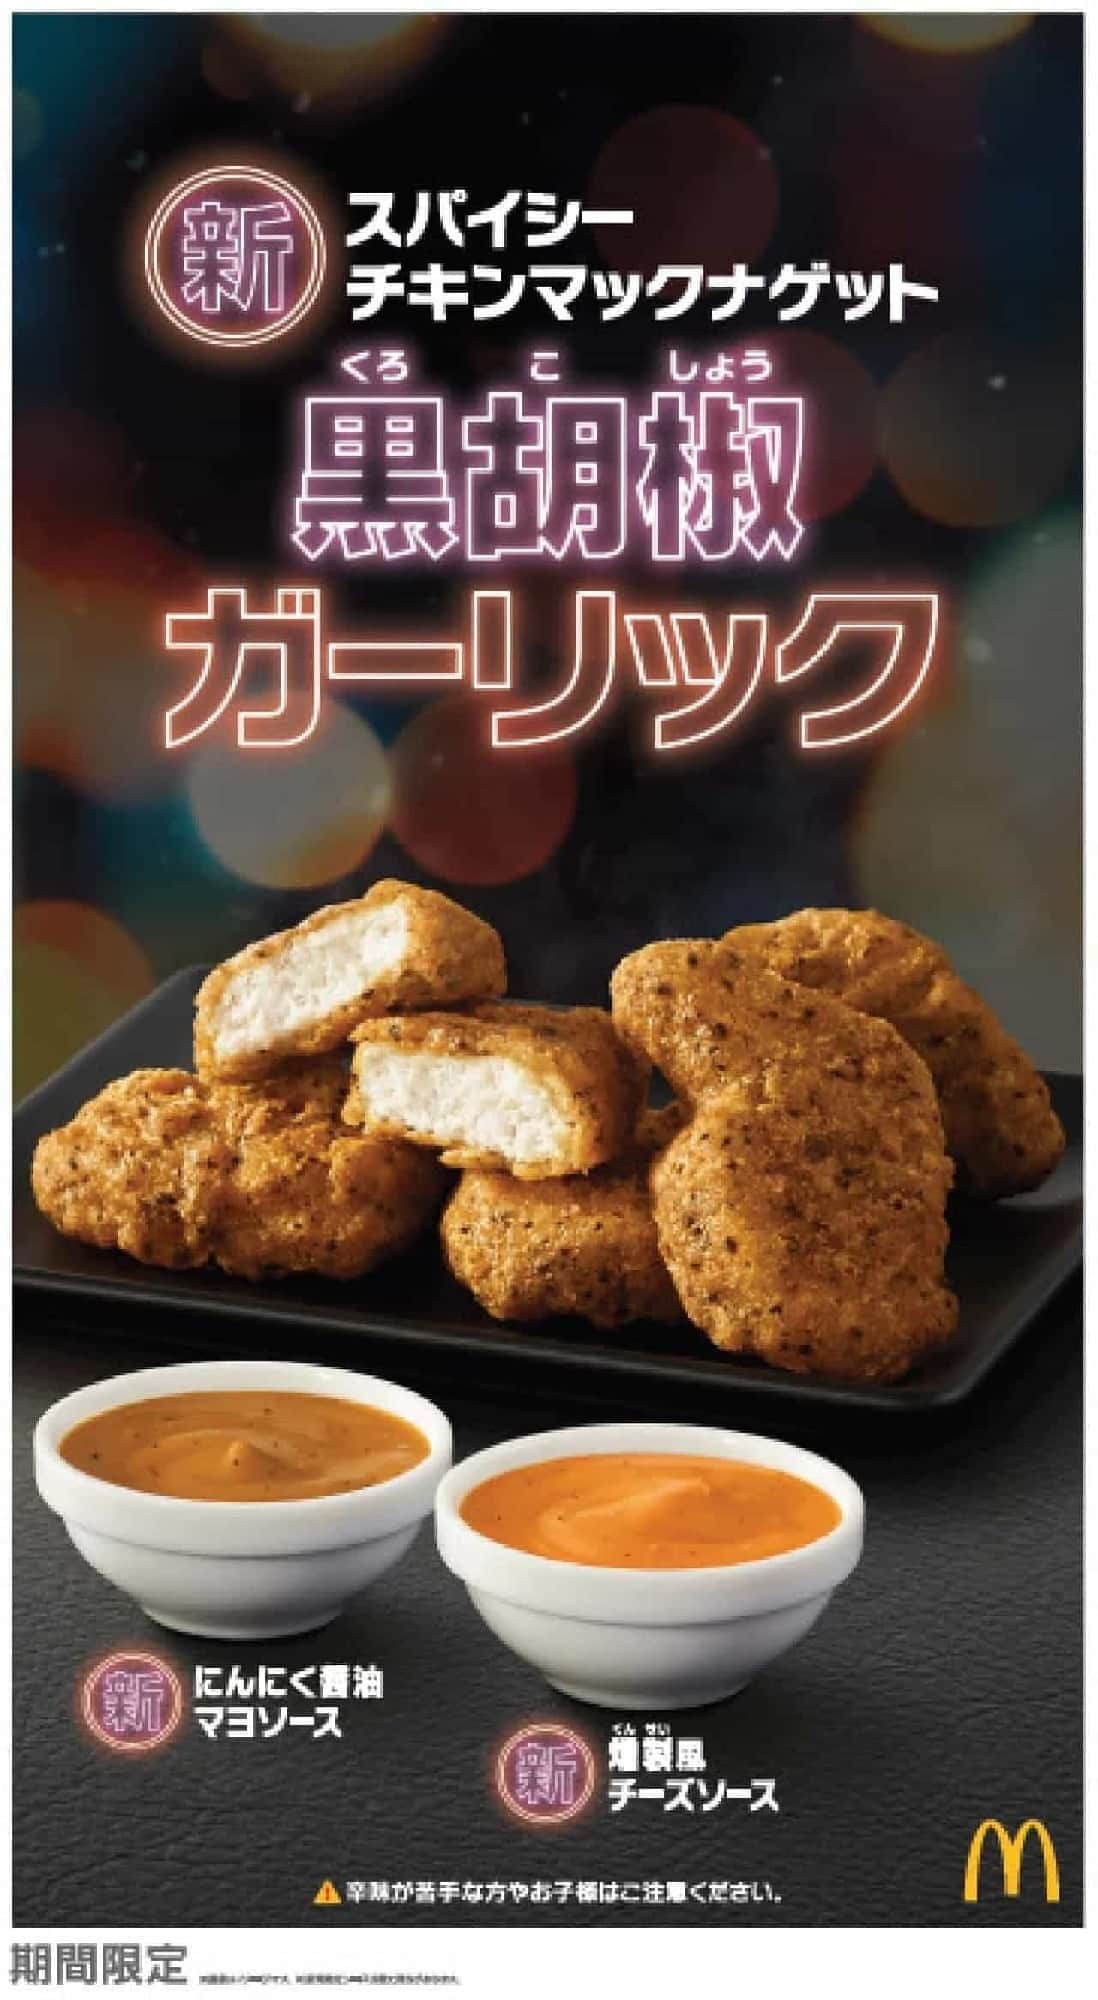 McDonald's "Spicy Chicken McNugget Peppercorn Garlic"